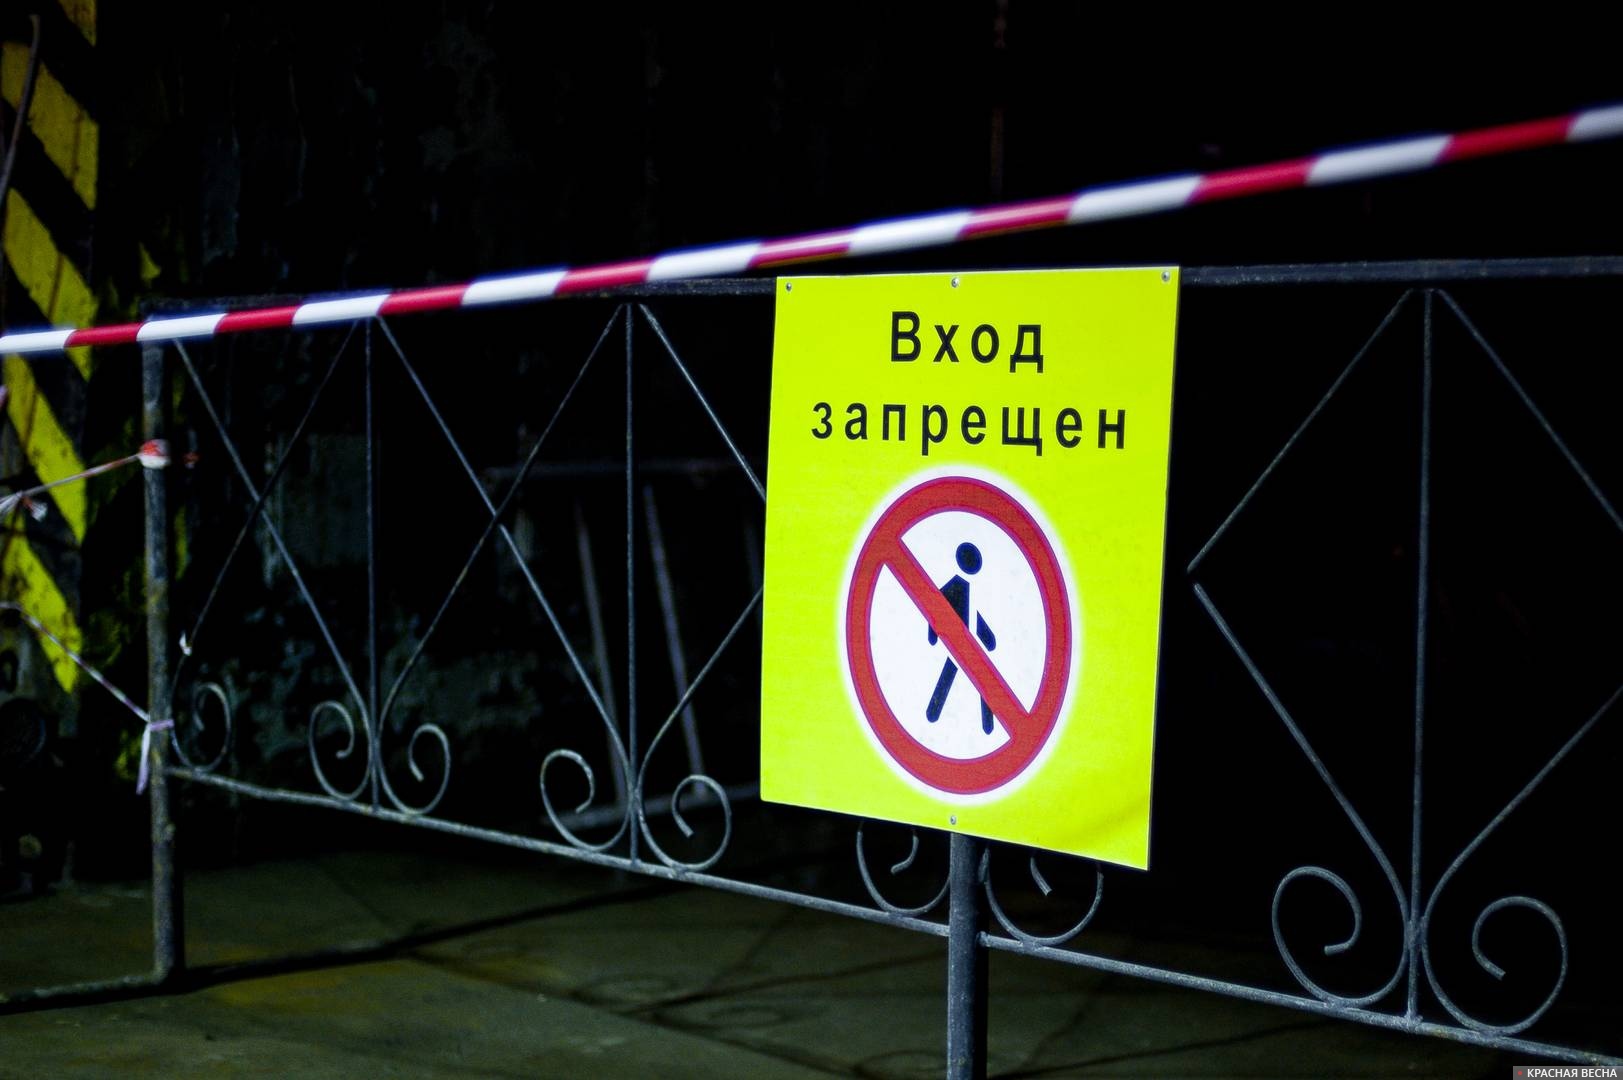 На территории запрещено. Запретили въезд российским. Цыганам вход запрещен знак. Яндексу вход запрещен.